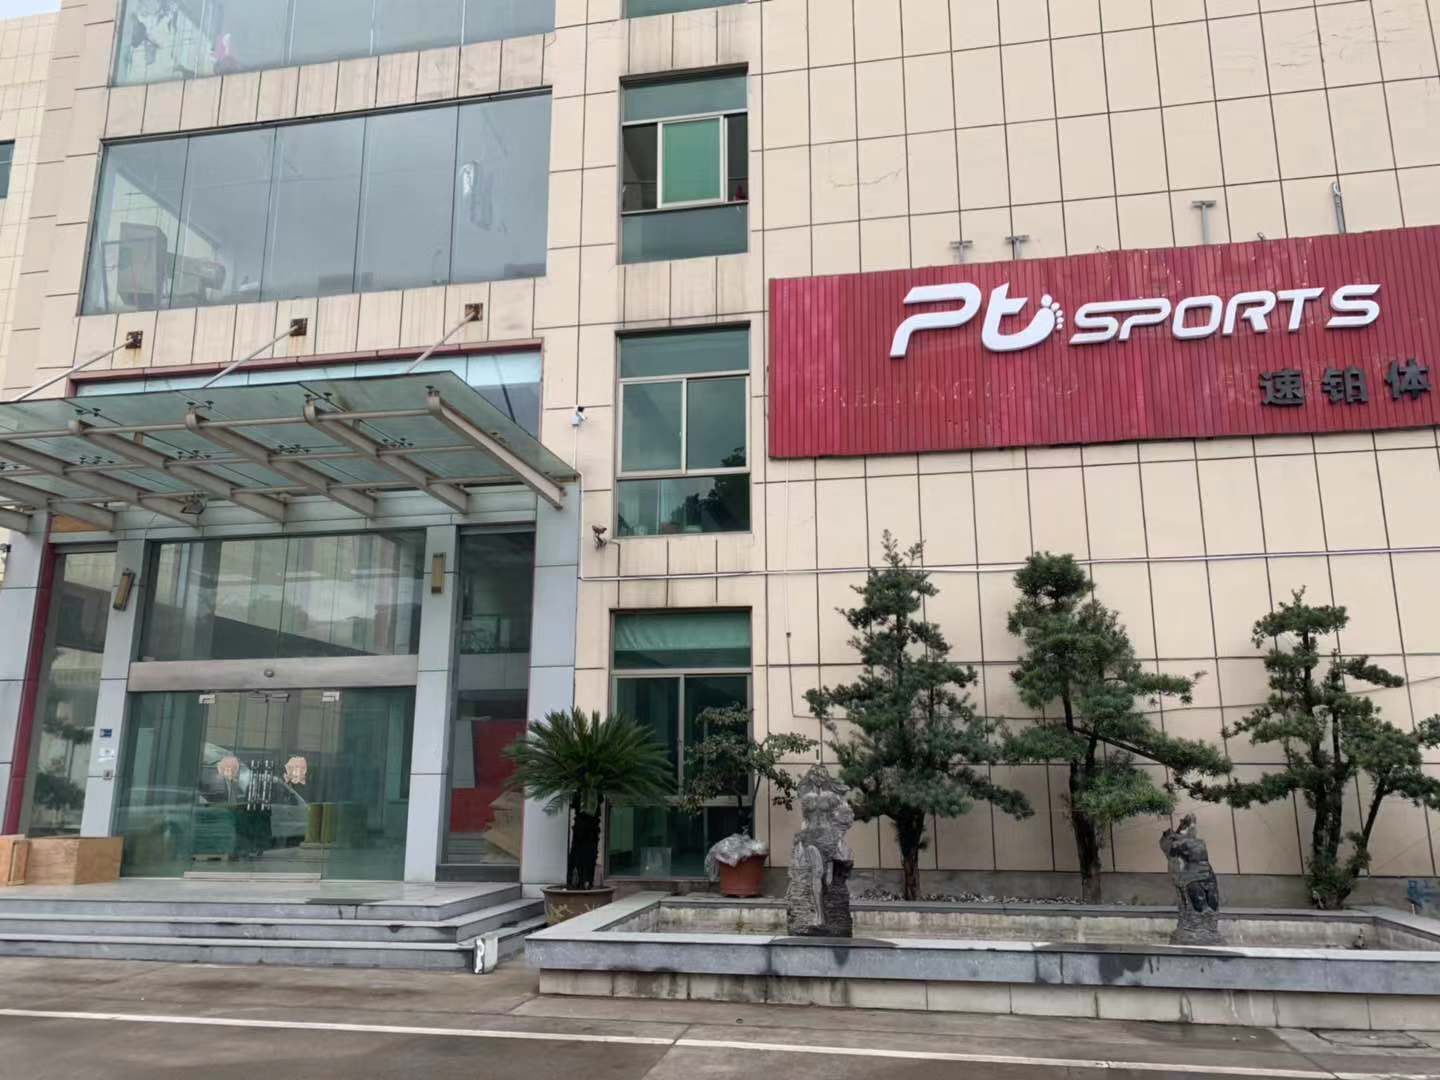 Ptsports company